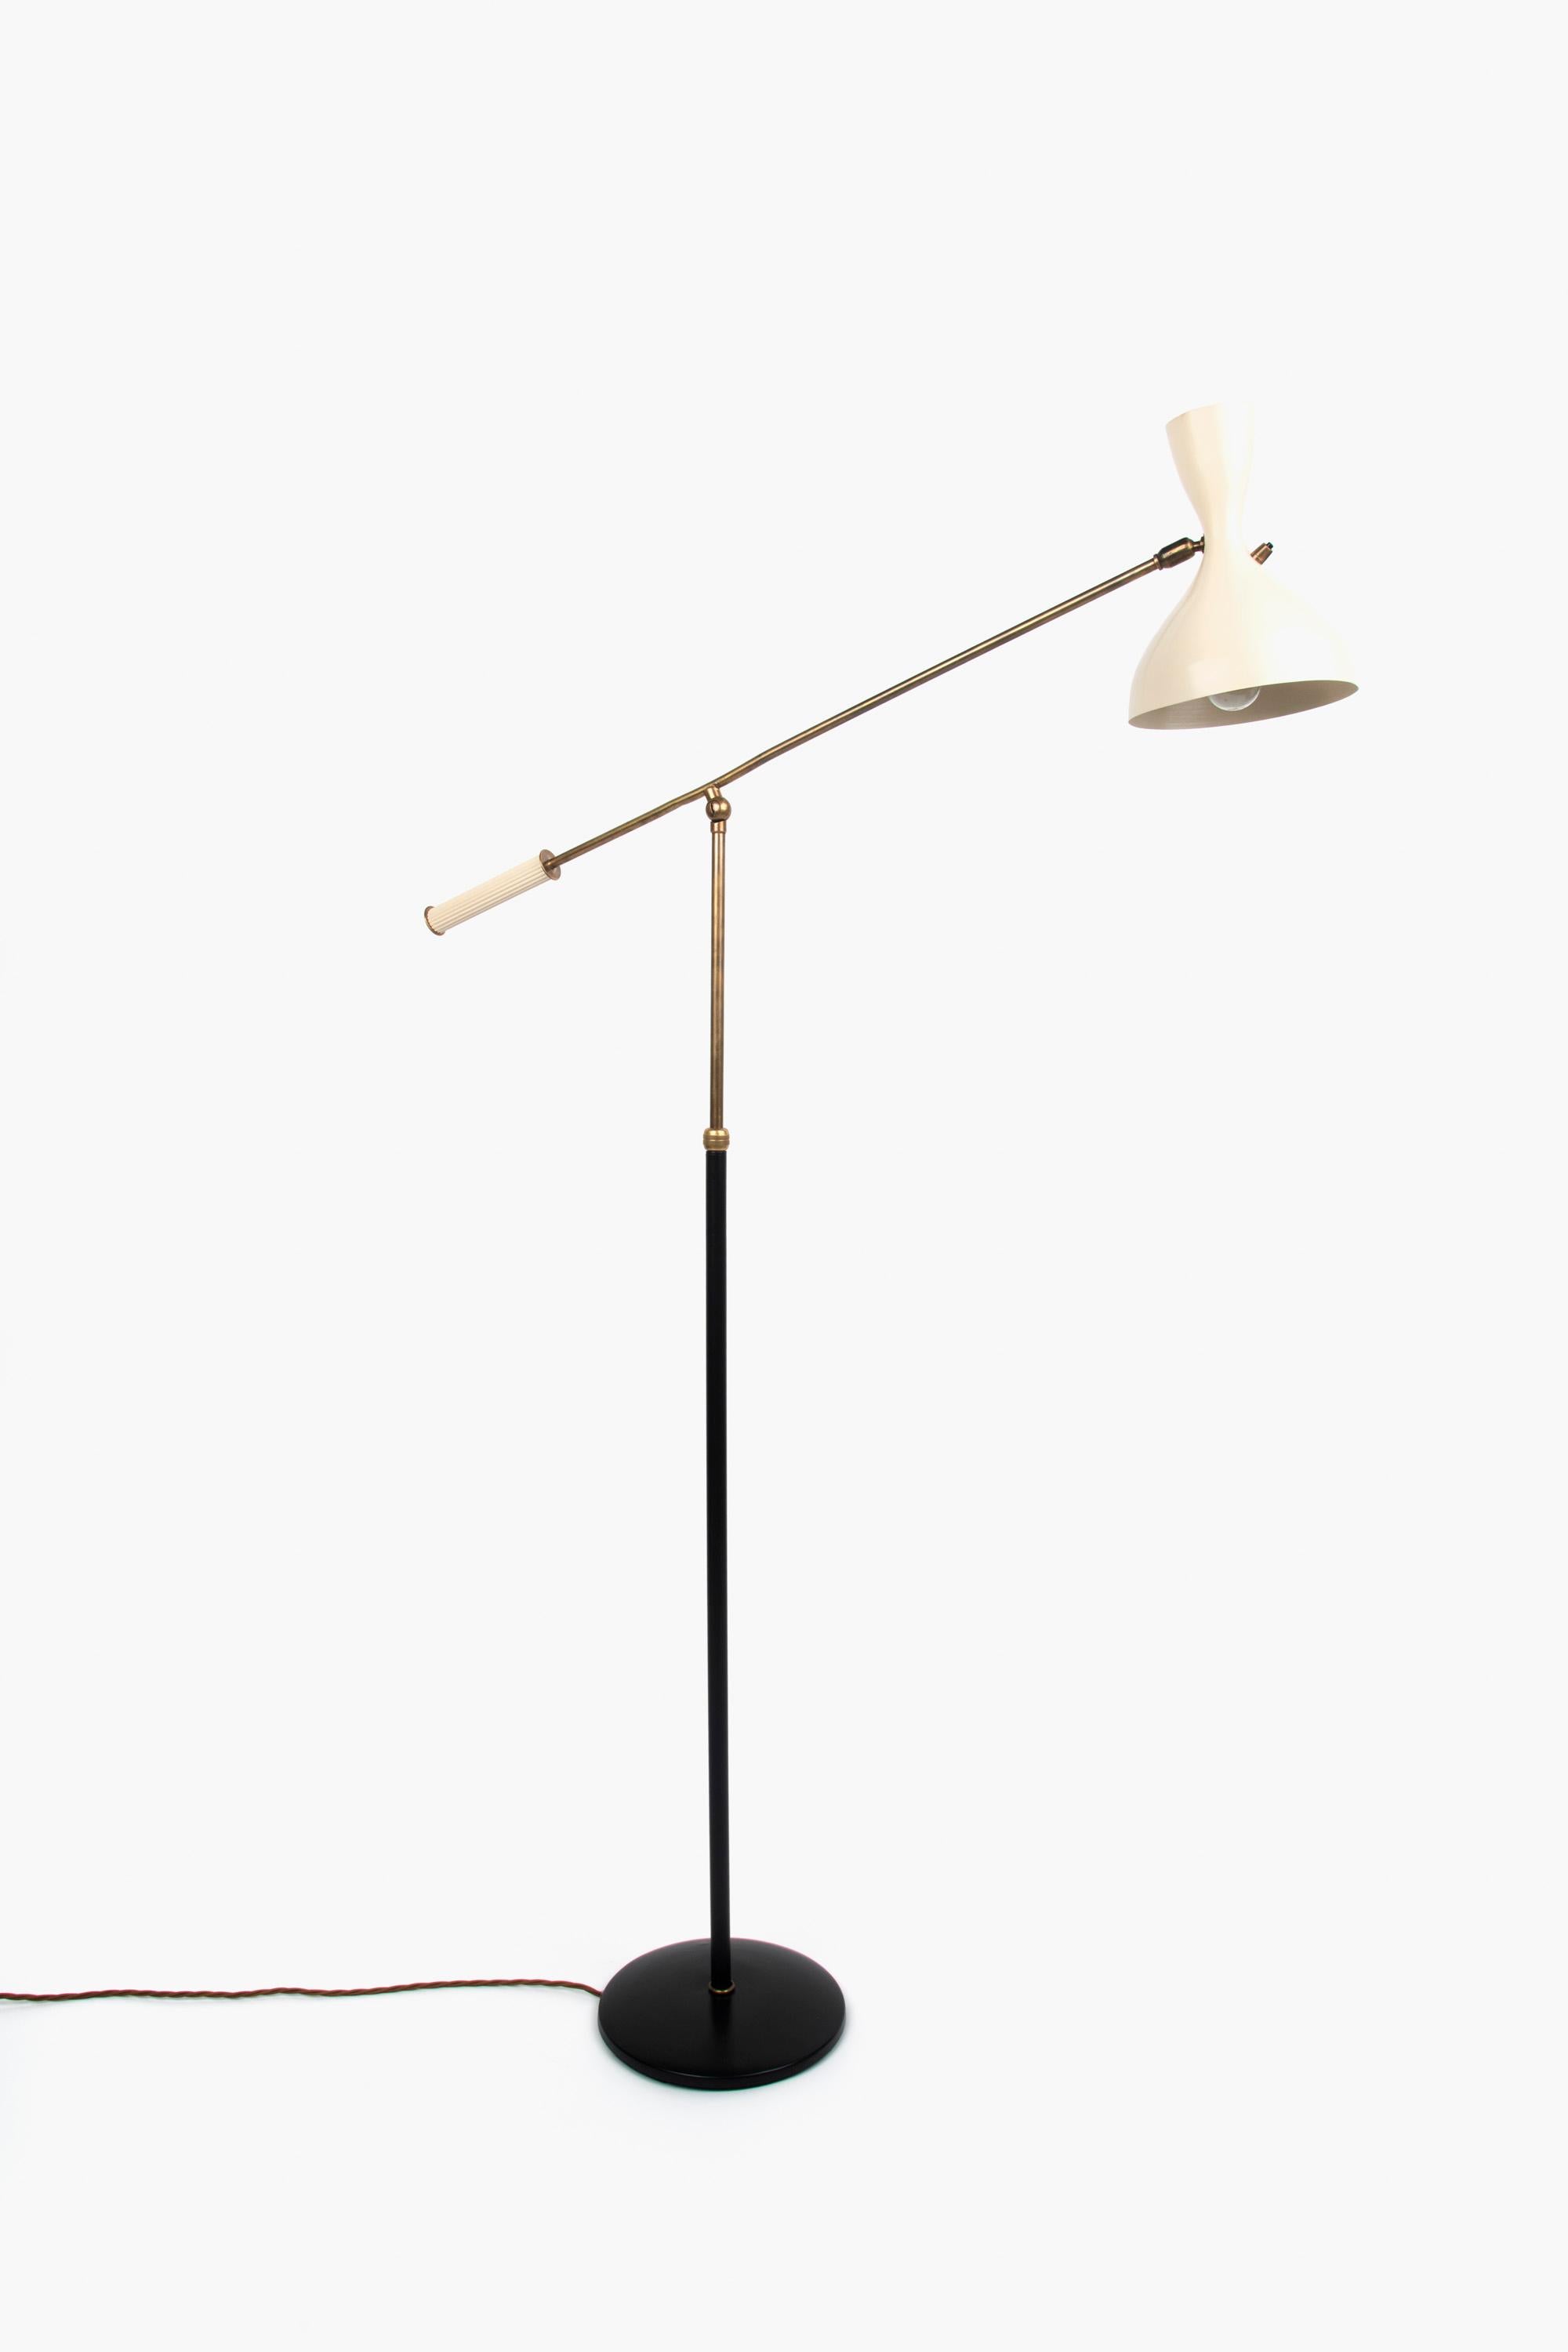 20th Century Italian Floor Lamp by Lumen Milano, 1950s For Sale